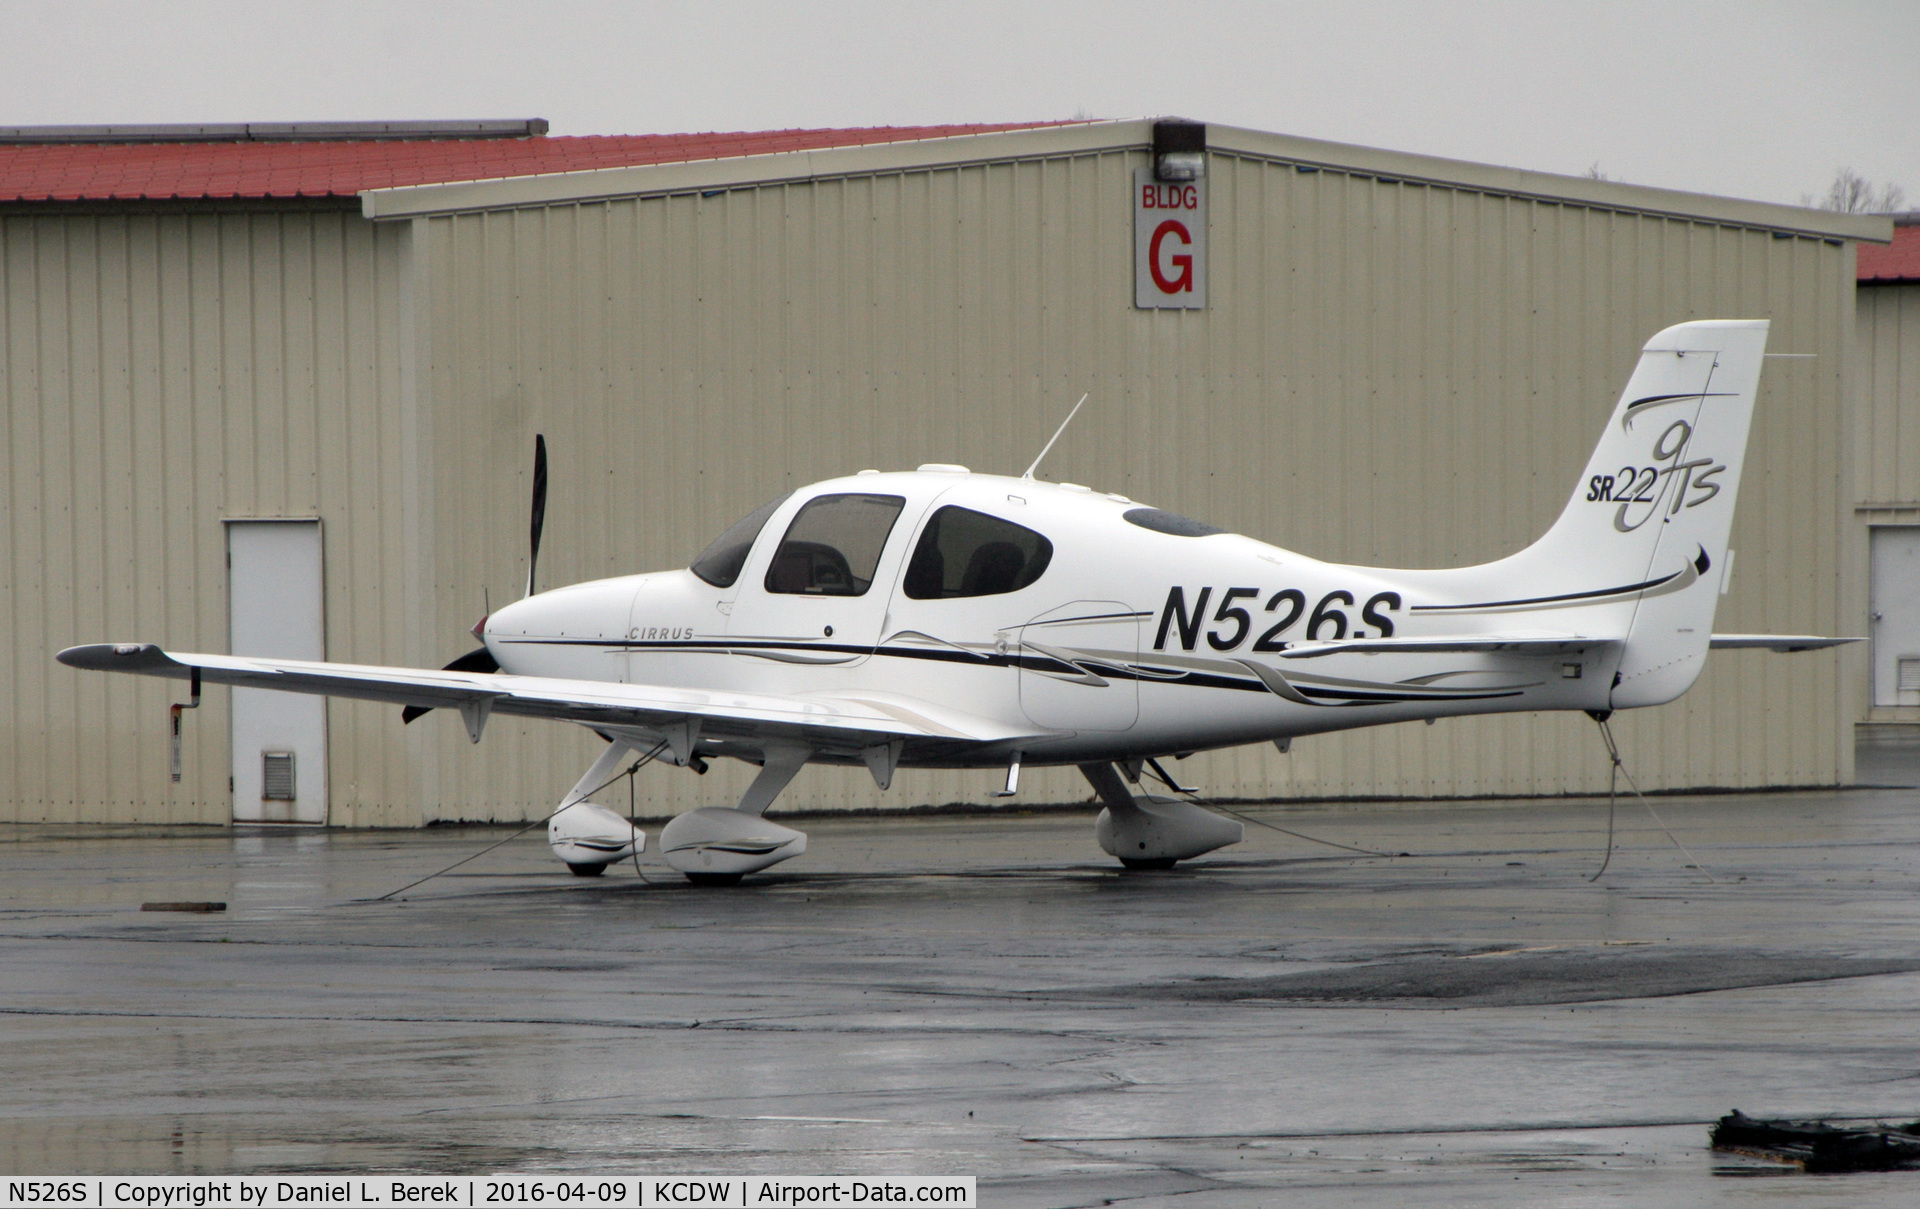 N526S, 2005 Cirrus SR22 GTS C/N 1667, Caught this sleek airplane snoozing on a lazy, rainy day.